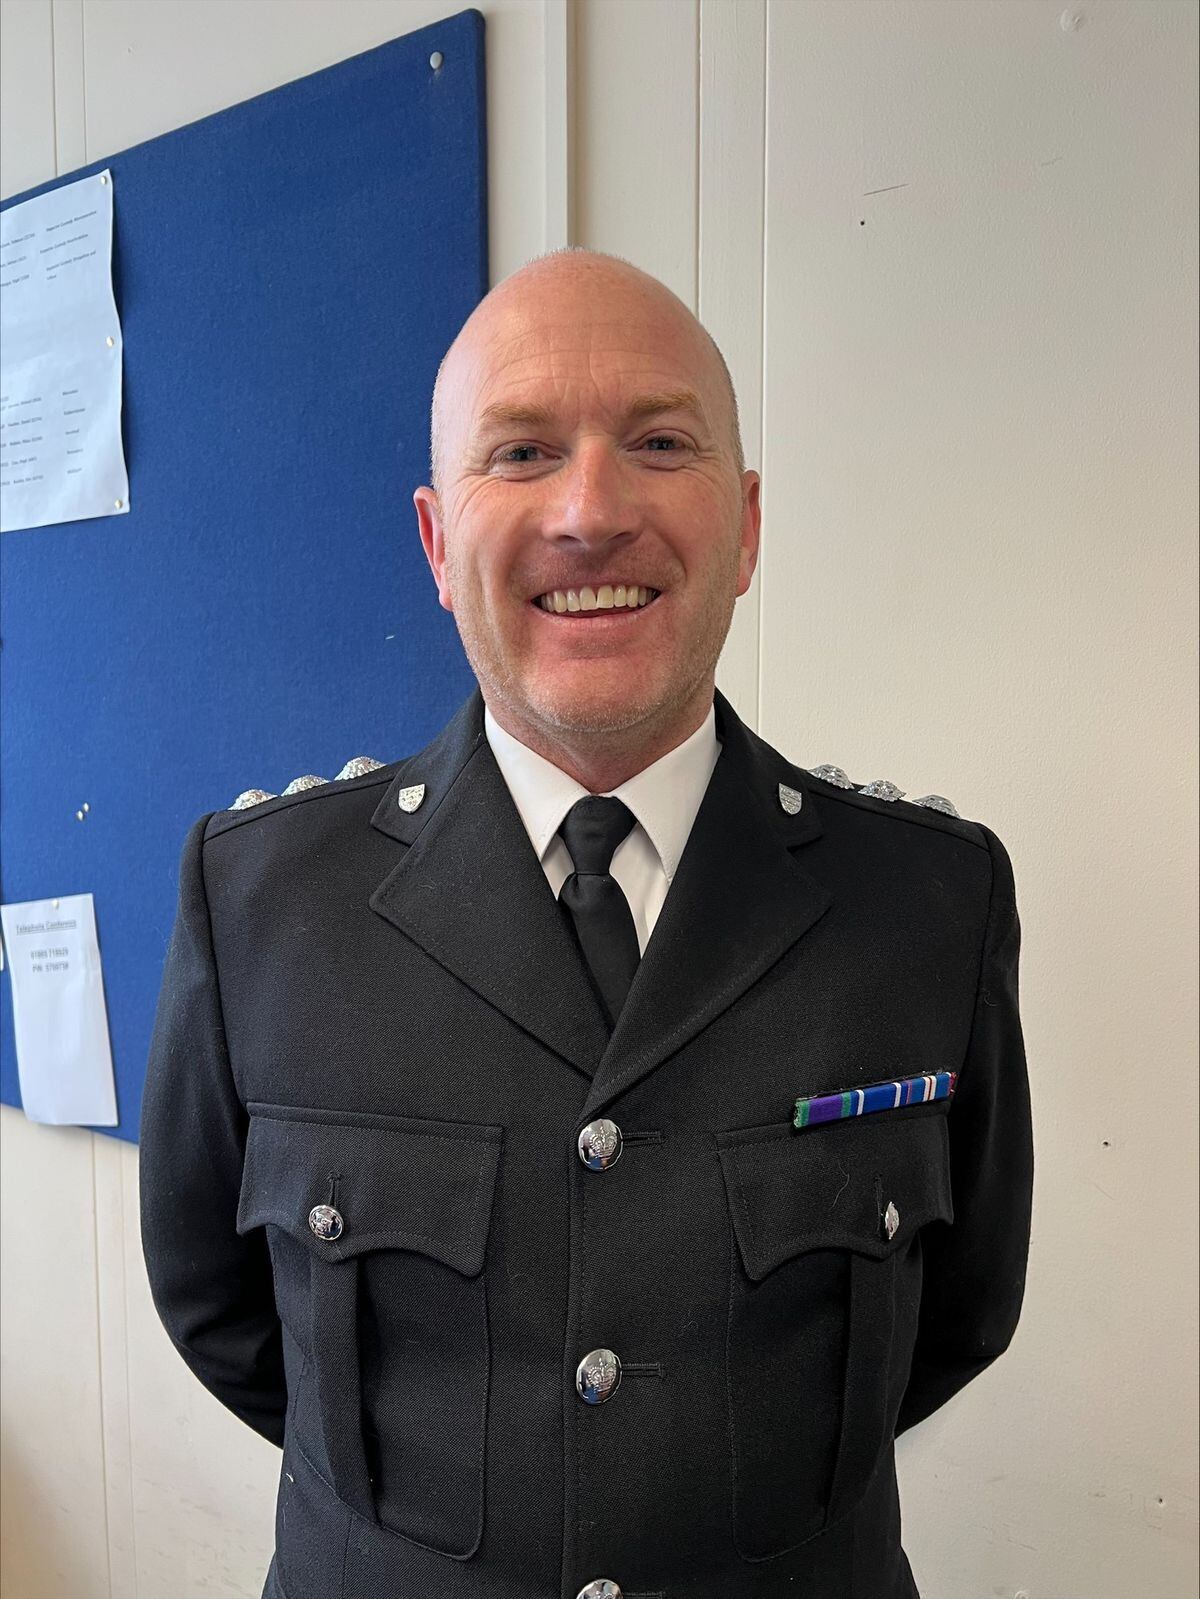 Chief Inspector Mark Reilly